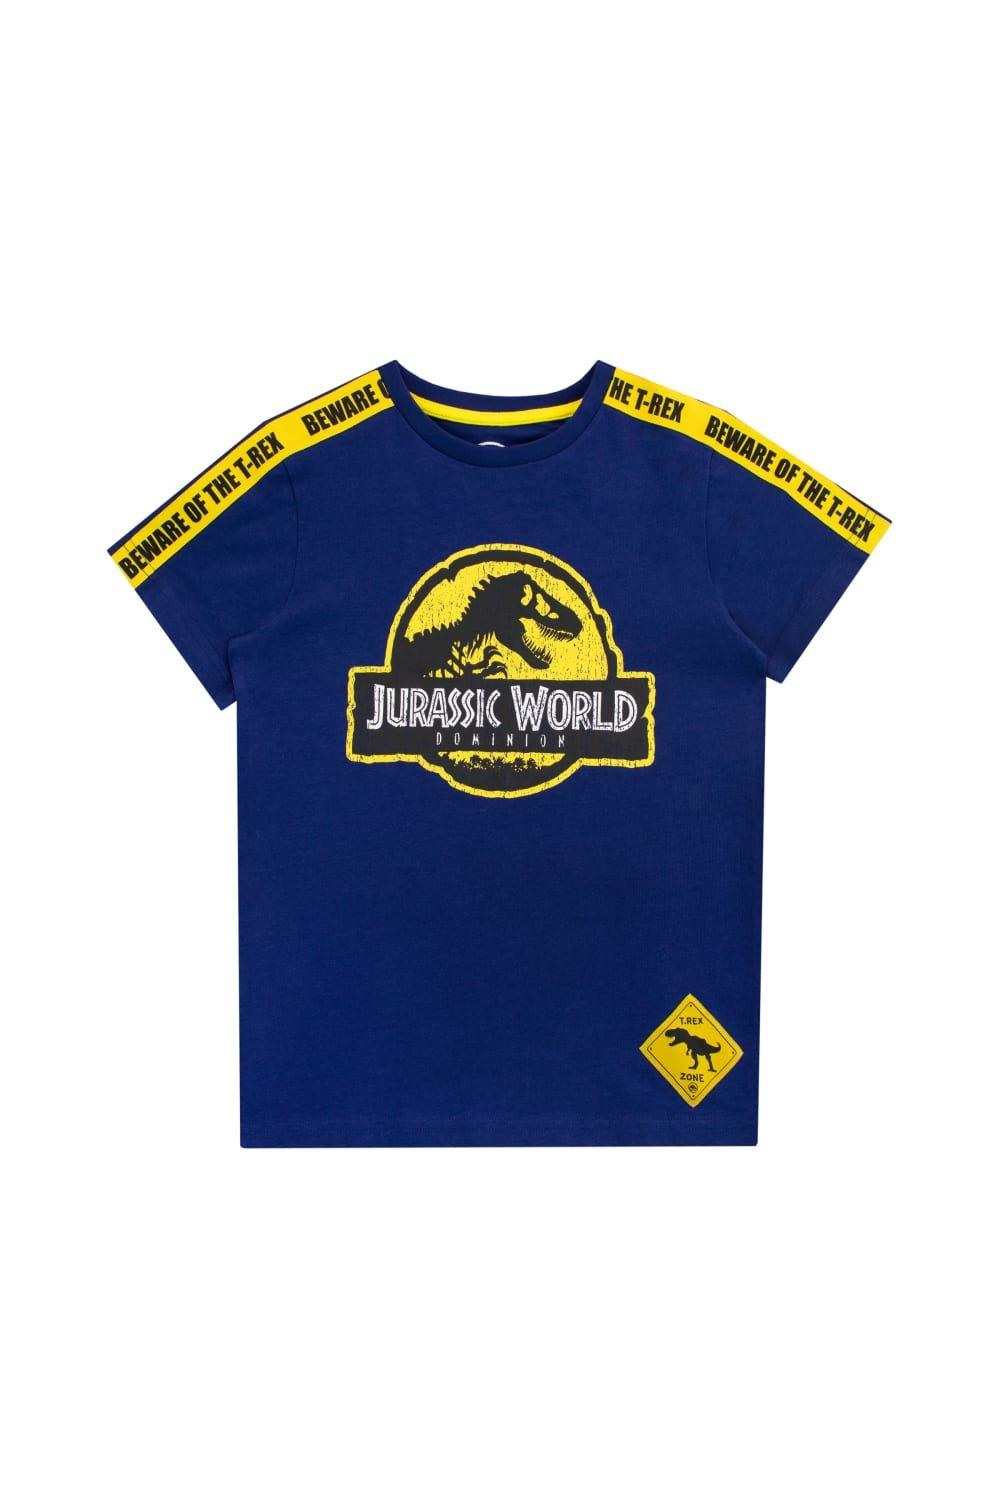 Beware Of The T-Rex Dinosaur T-Shirt